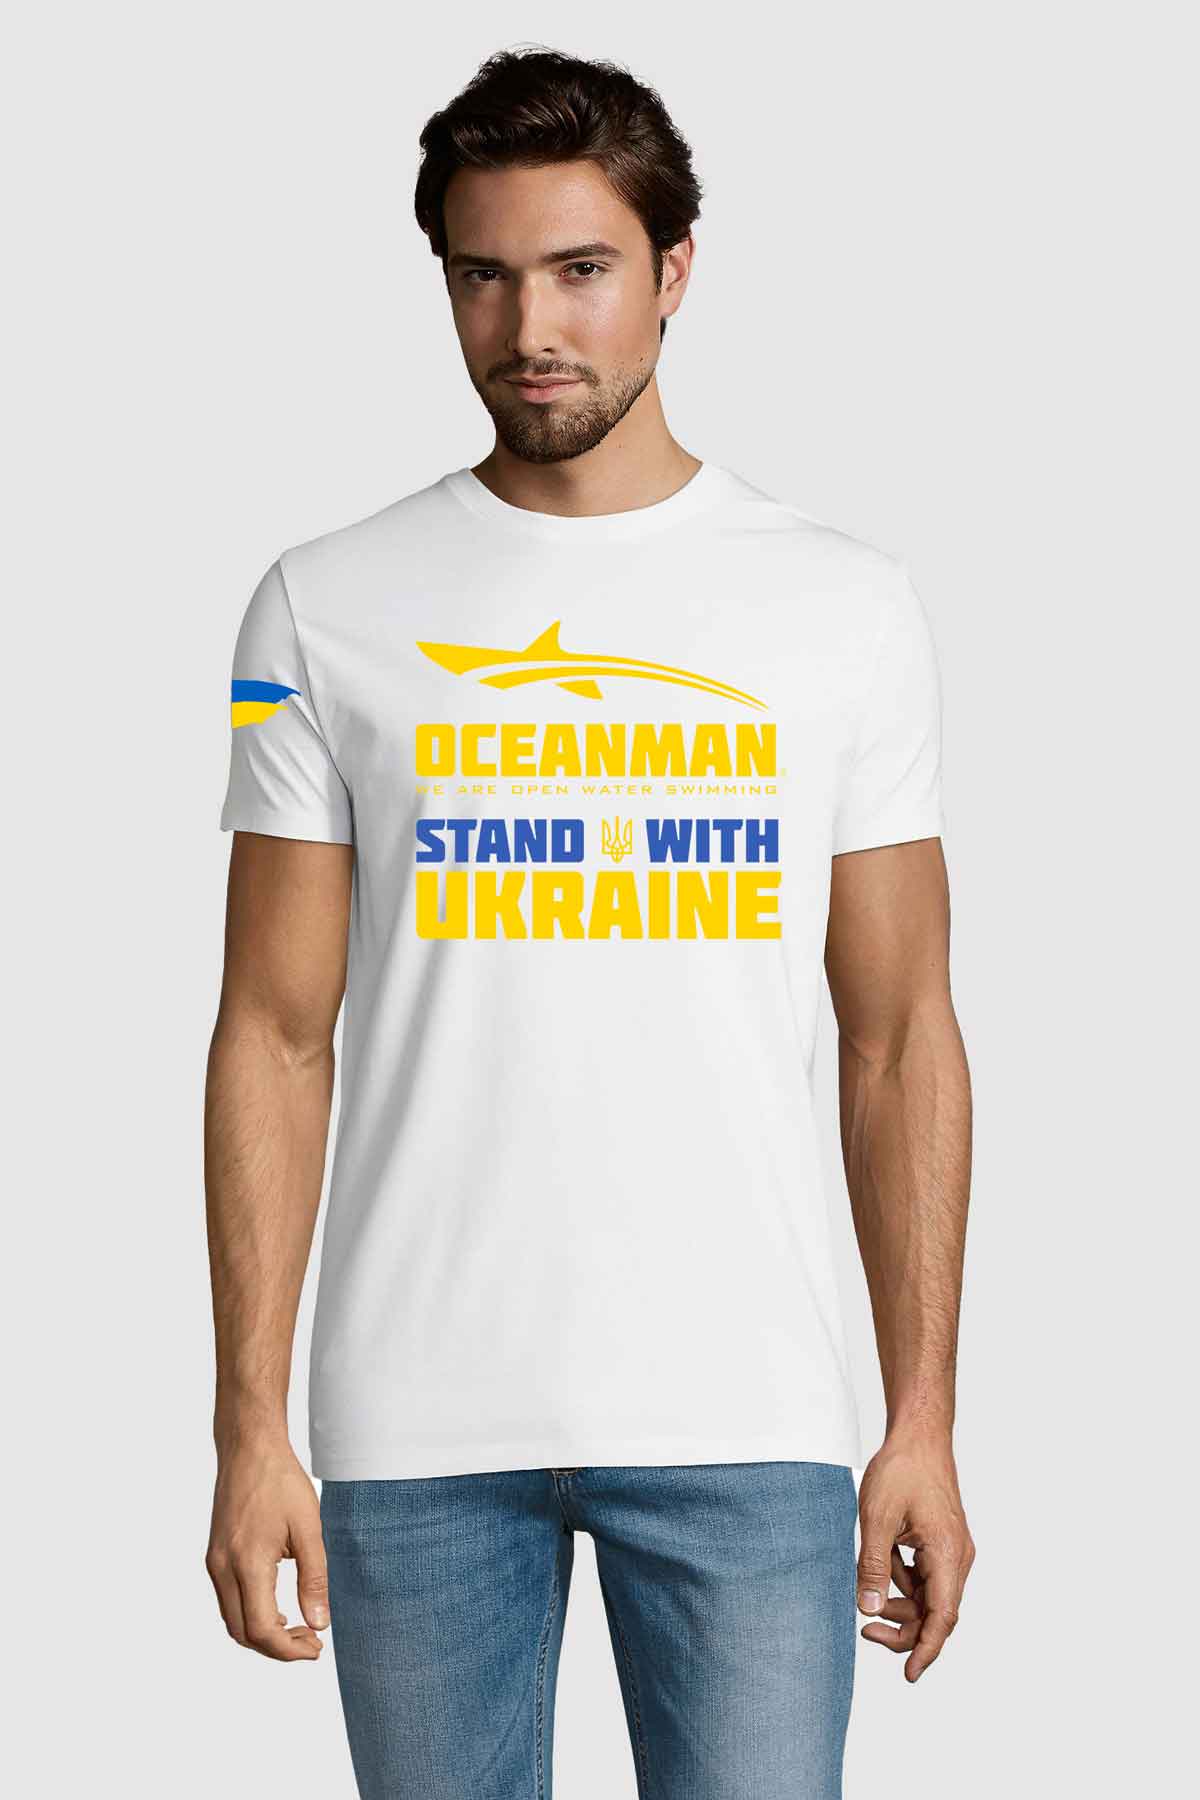 Oceanman stand with ukraine white t shirt men